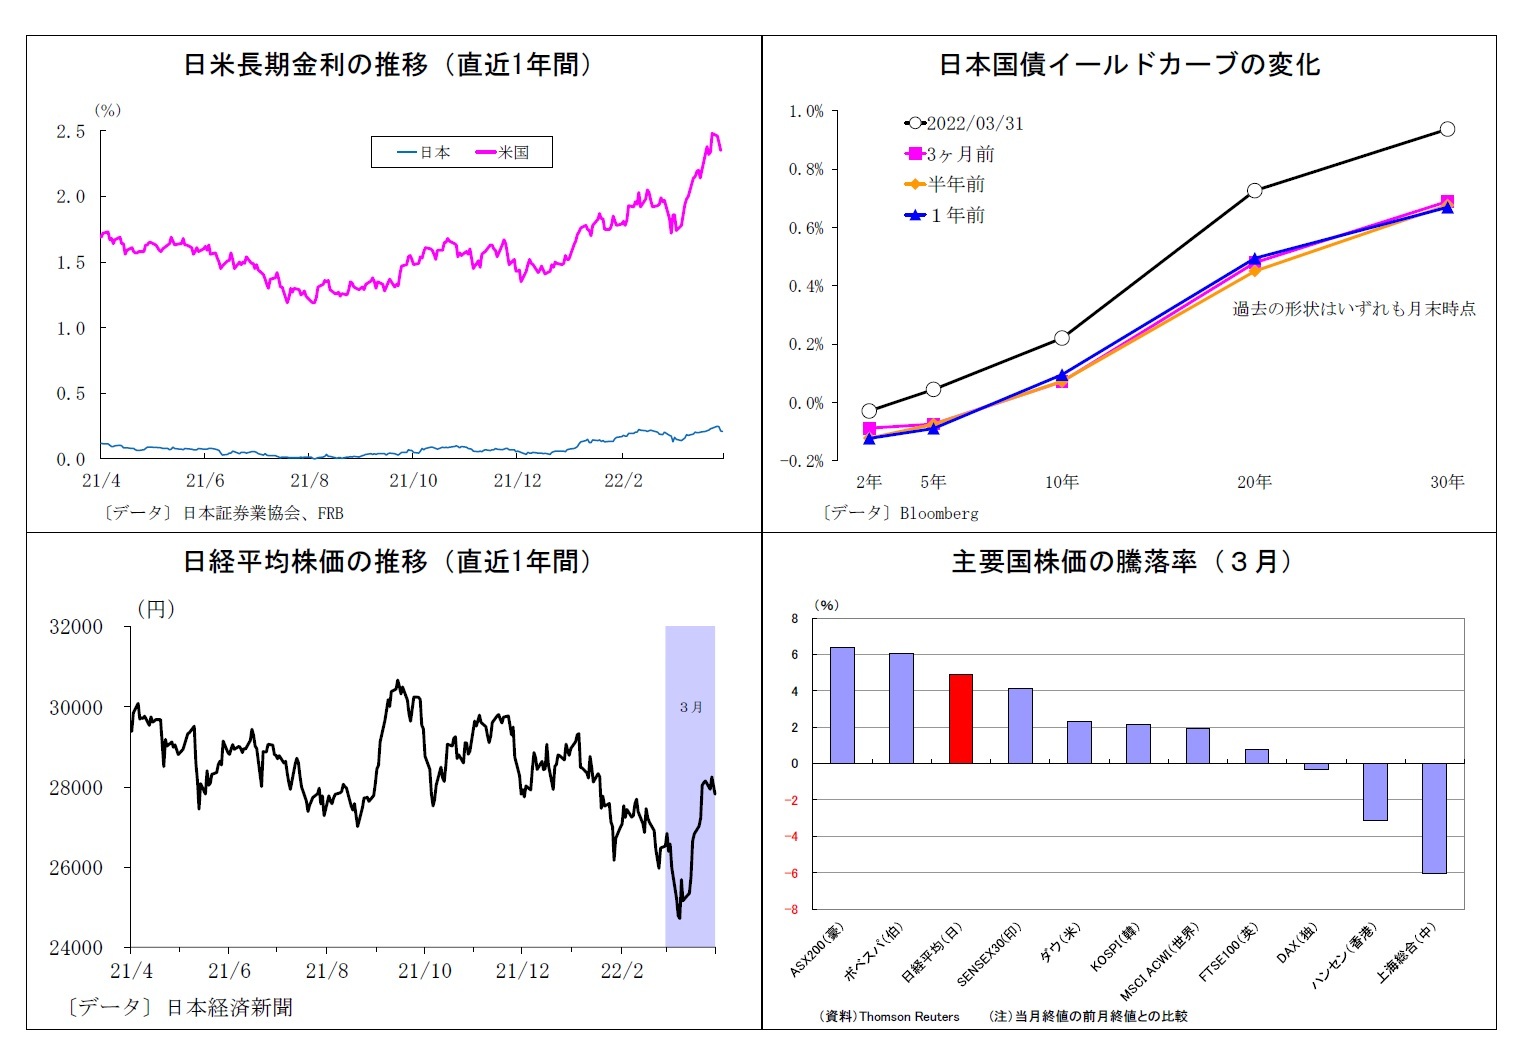 日米長期金利の推移（直近1年間）/日本国債イールドカーブの変化/日経平均株価の推移（直近1年間）/主要国株価の騰落率（３月）